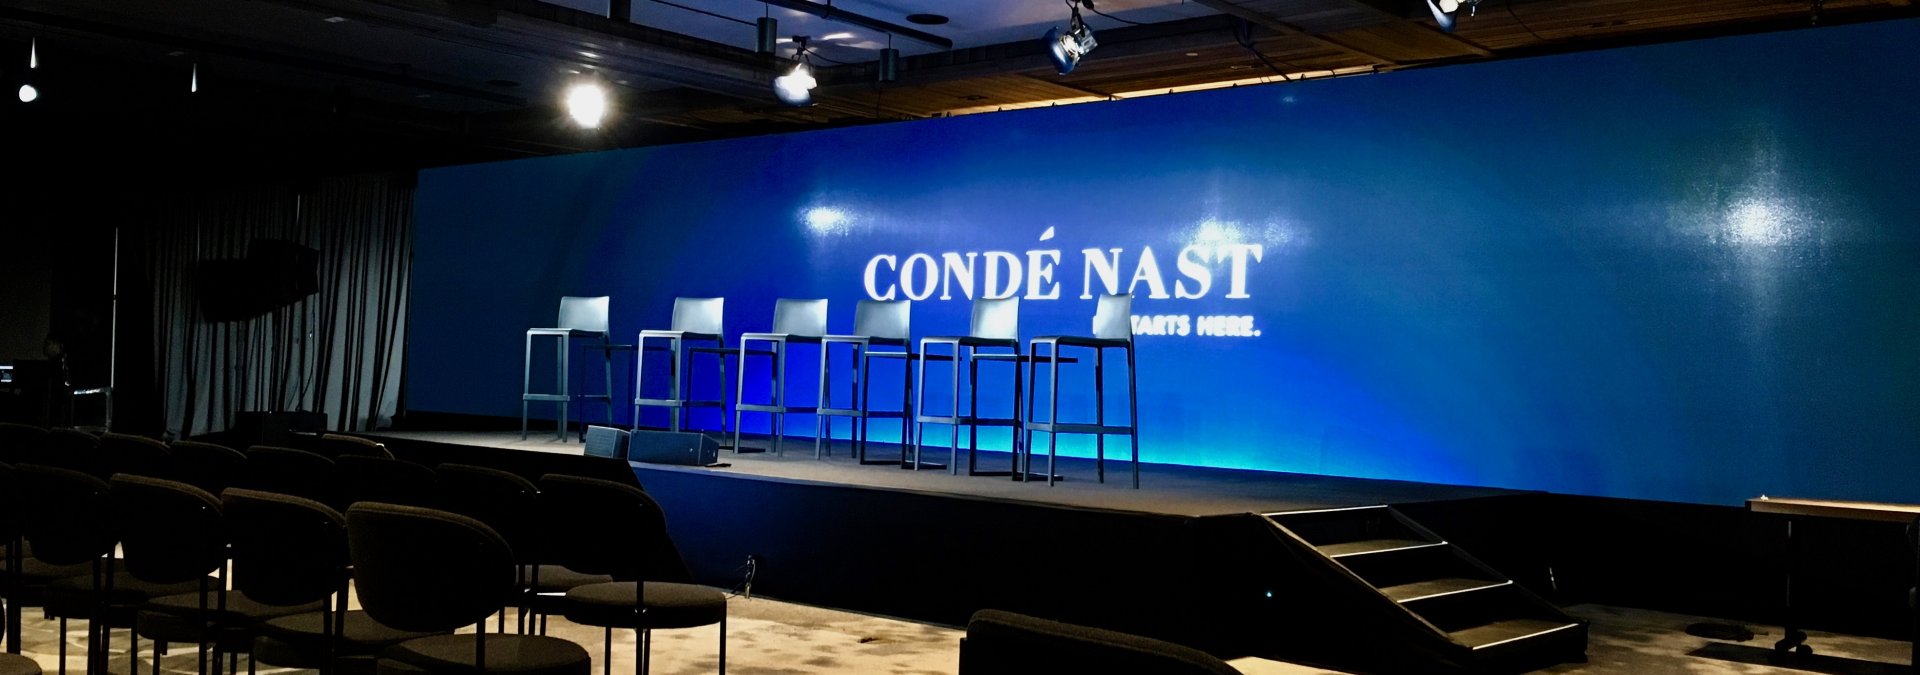 Condé Nast Media Company Conference, Brooklyn, NYC